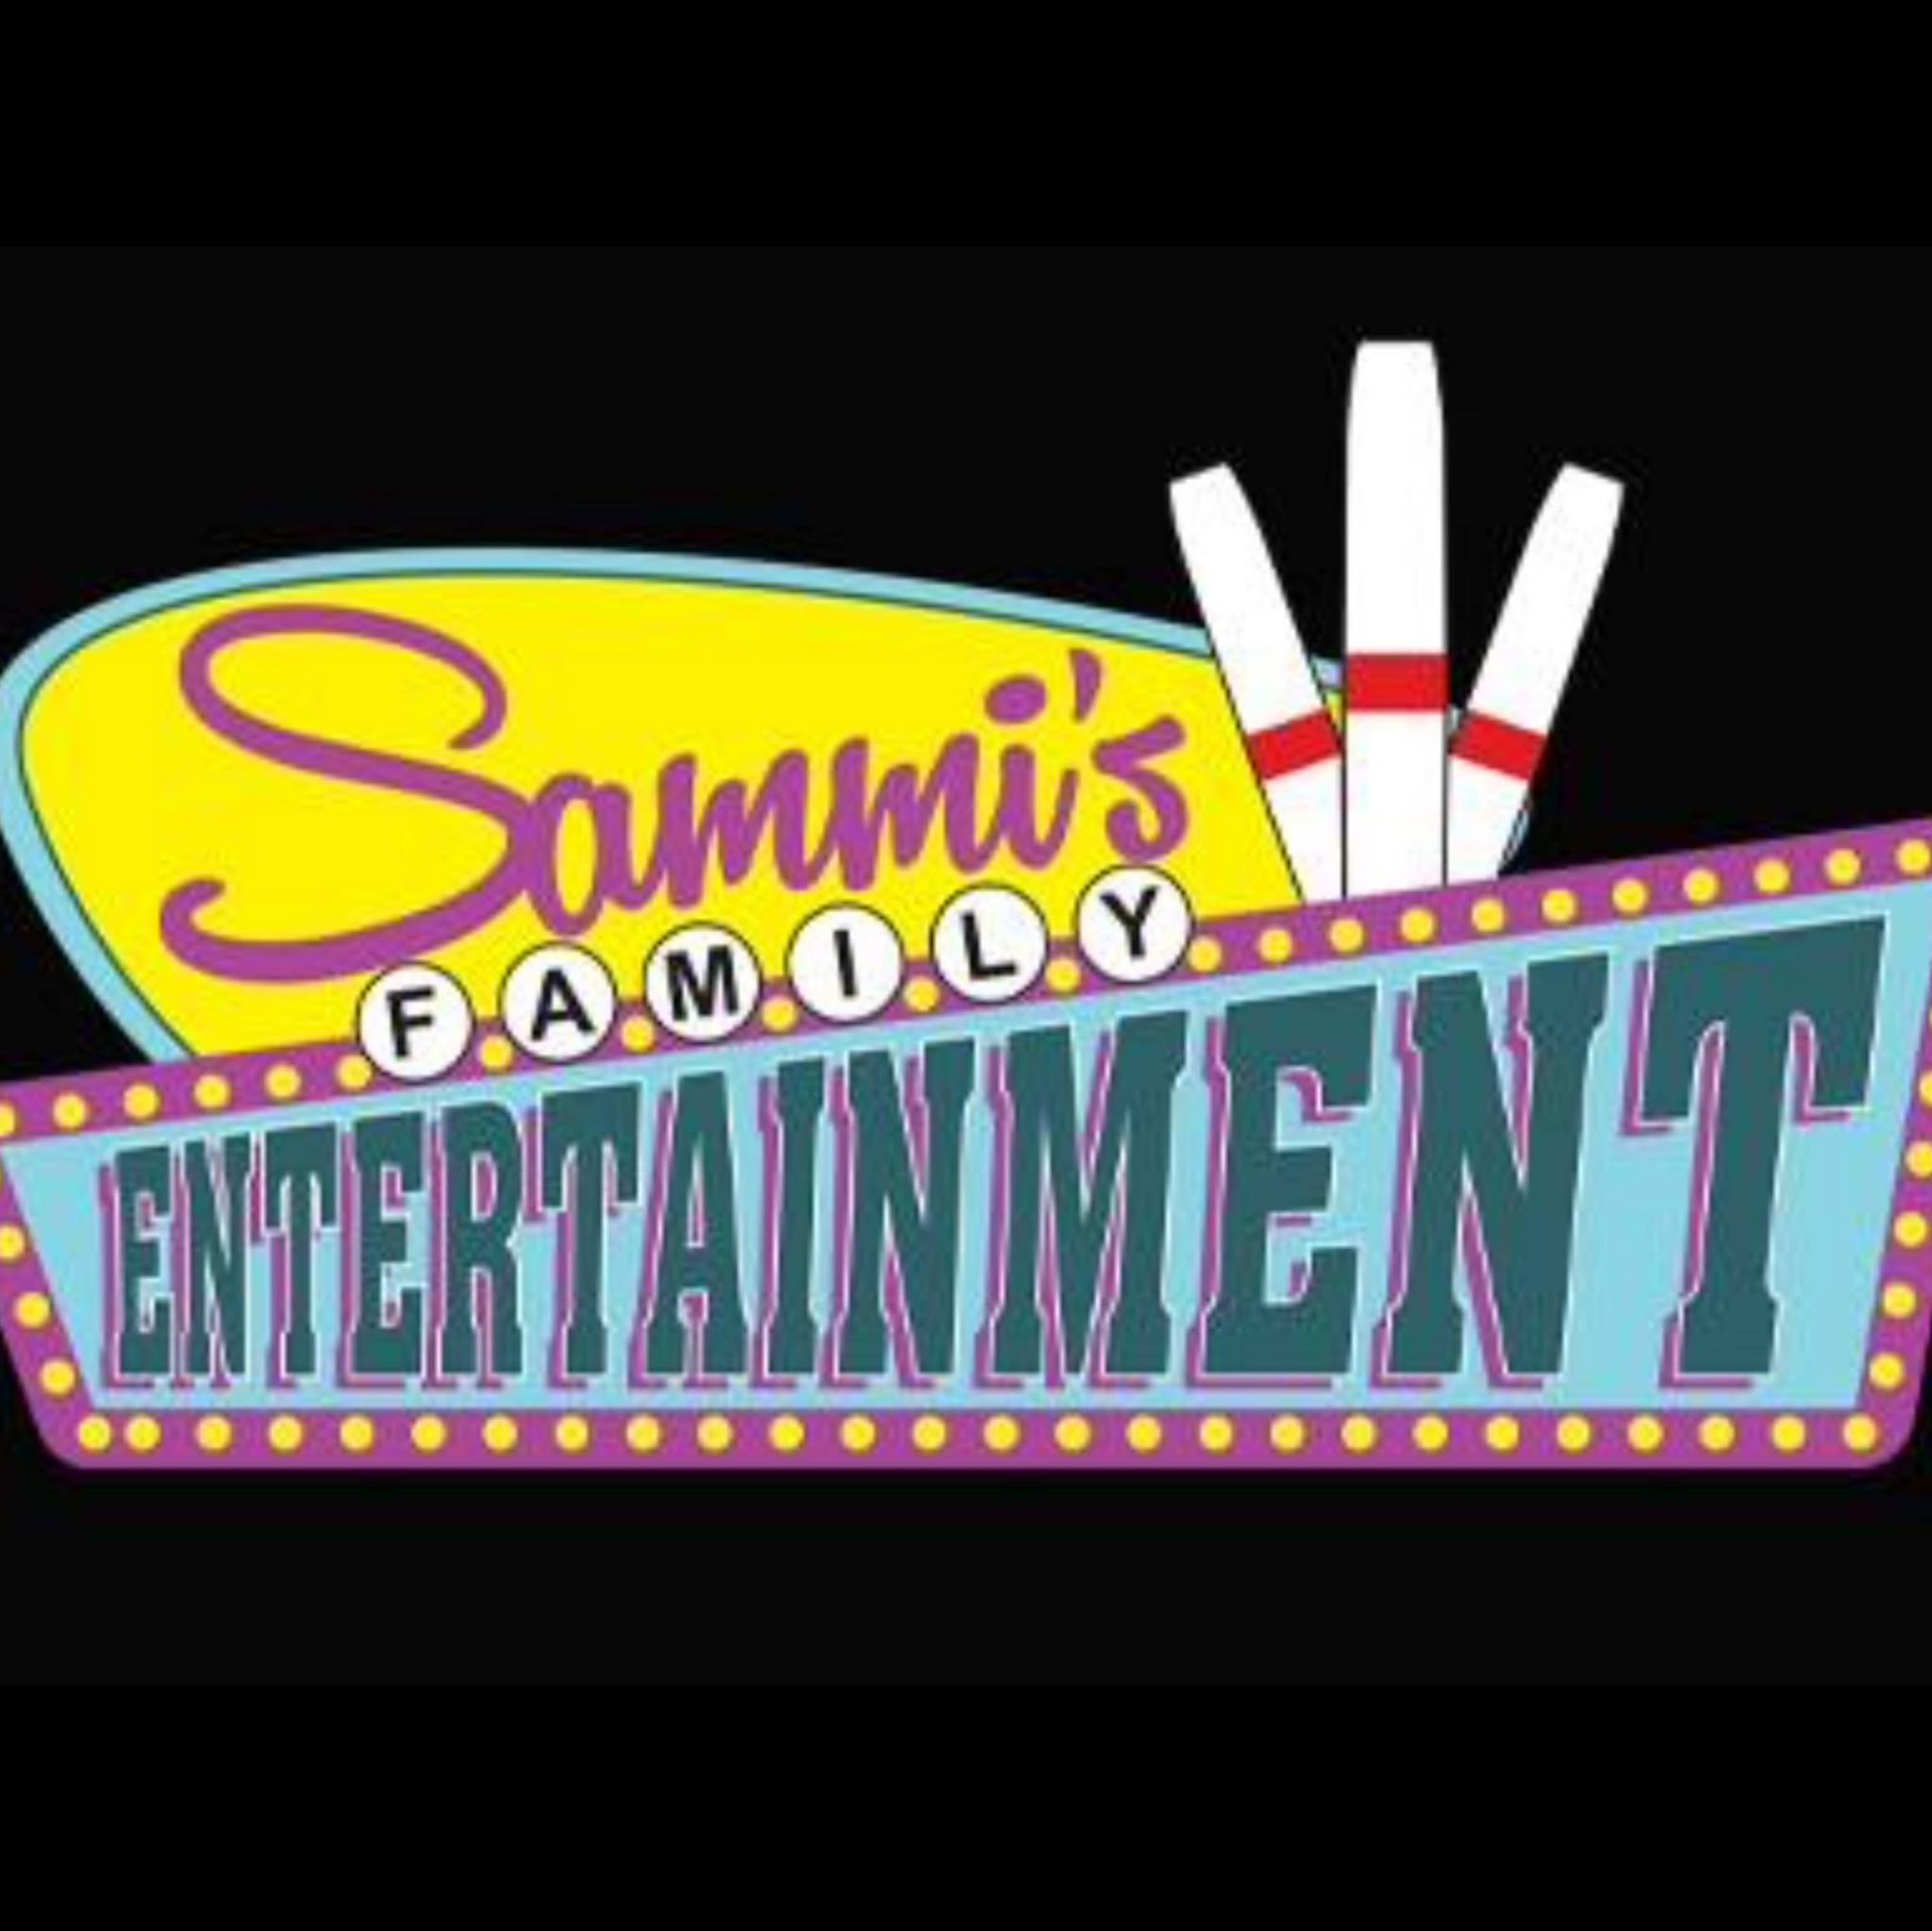 Sammi's Family Entertainment Center